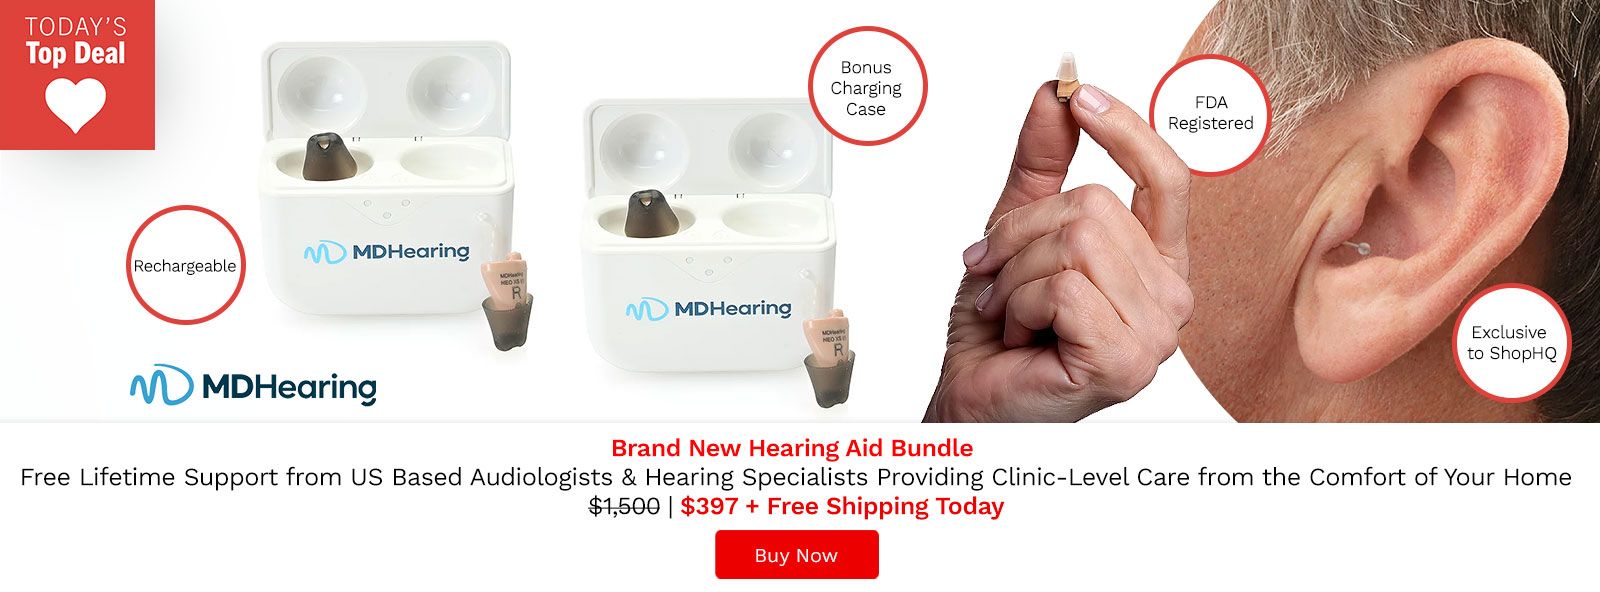 006-430 MD Hearing NEO XS w Bonus Charging Case